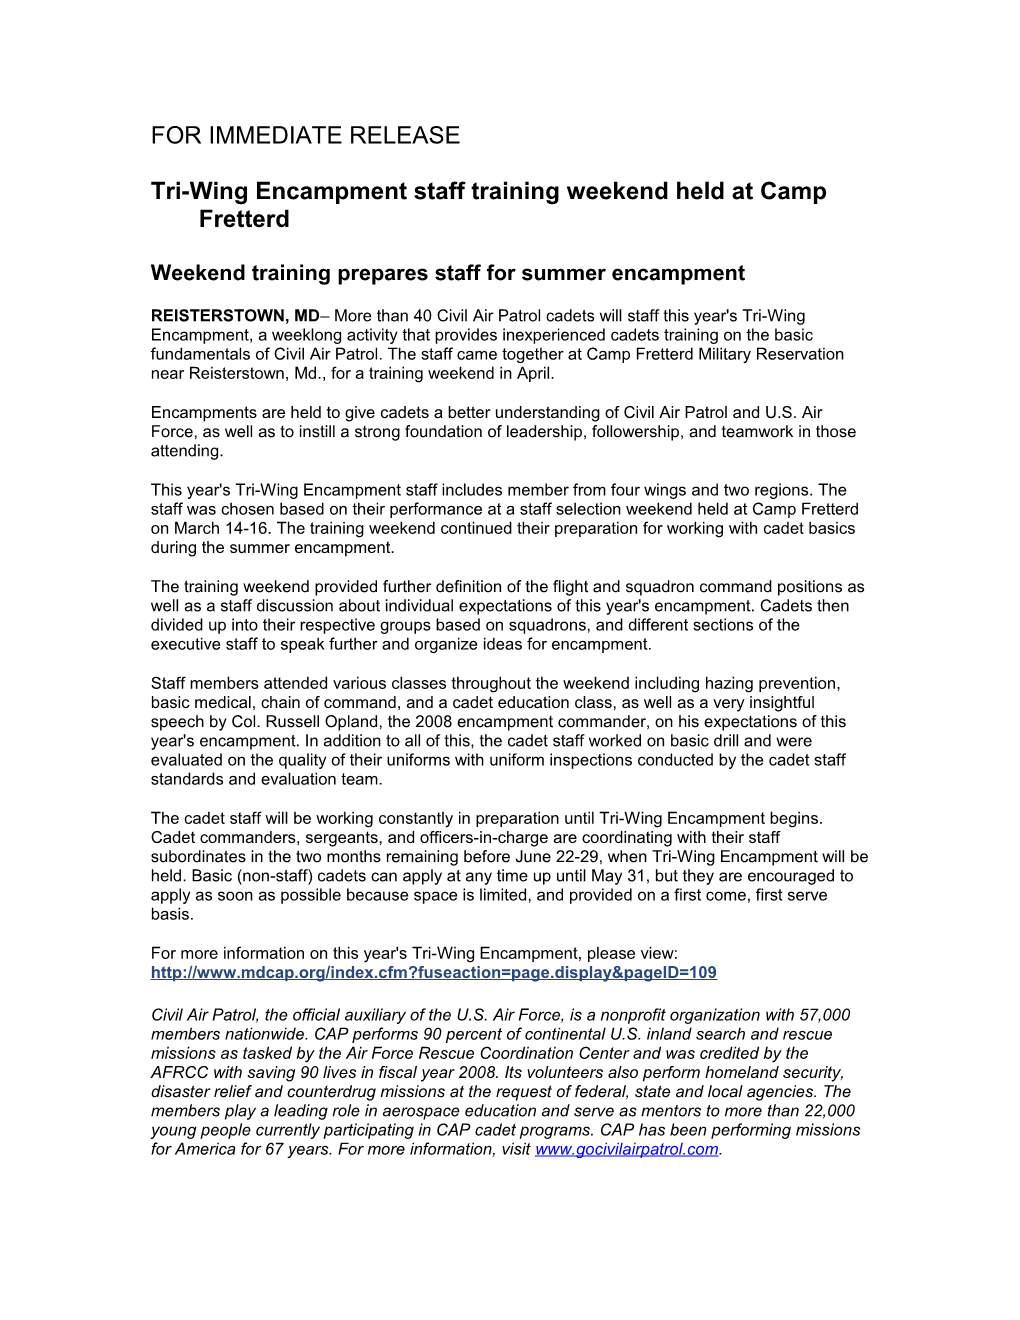 Tri-Wing Encampment Staff Training Weekend Held at Camp Fretterd